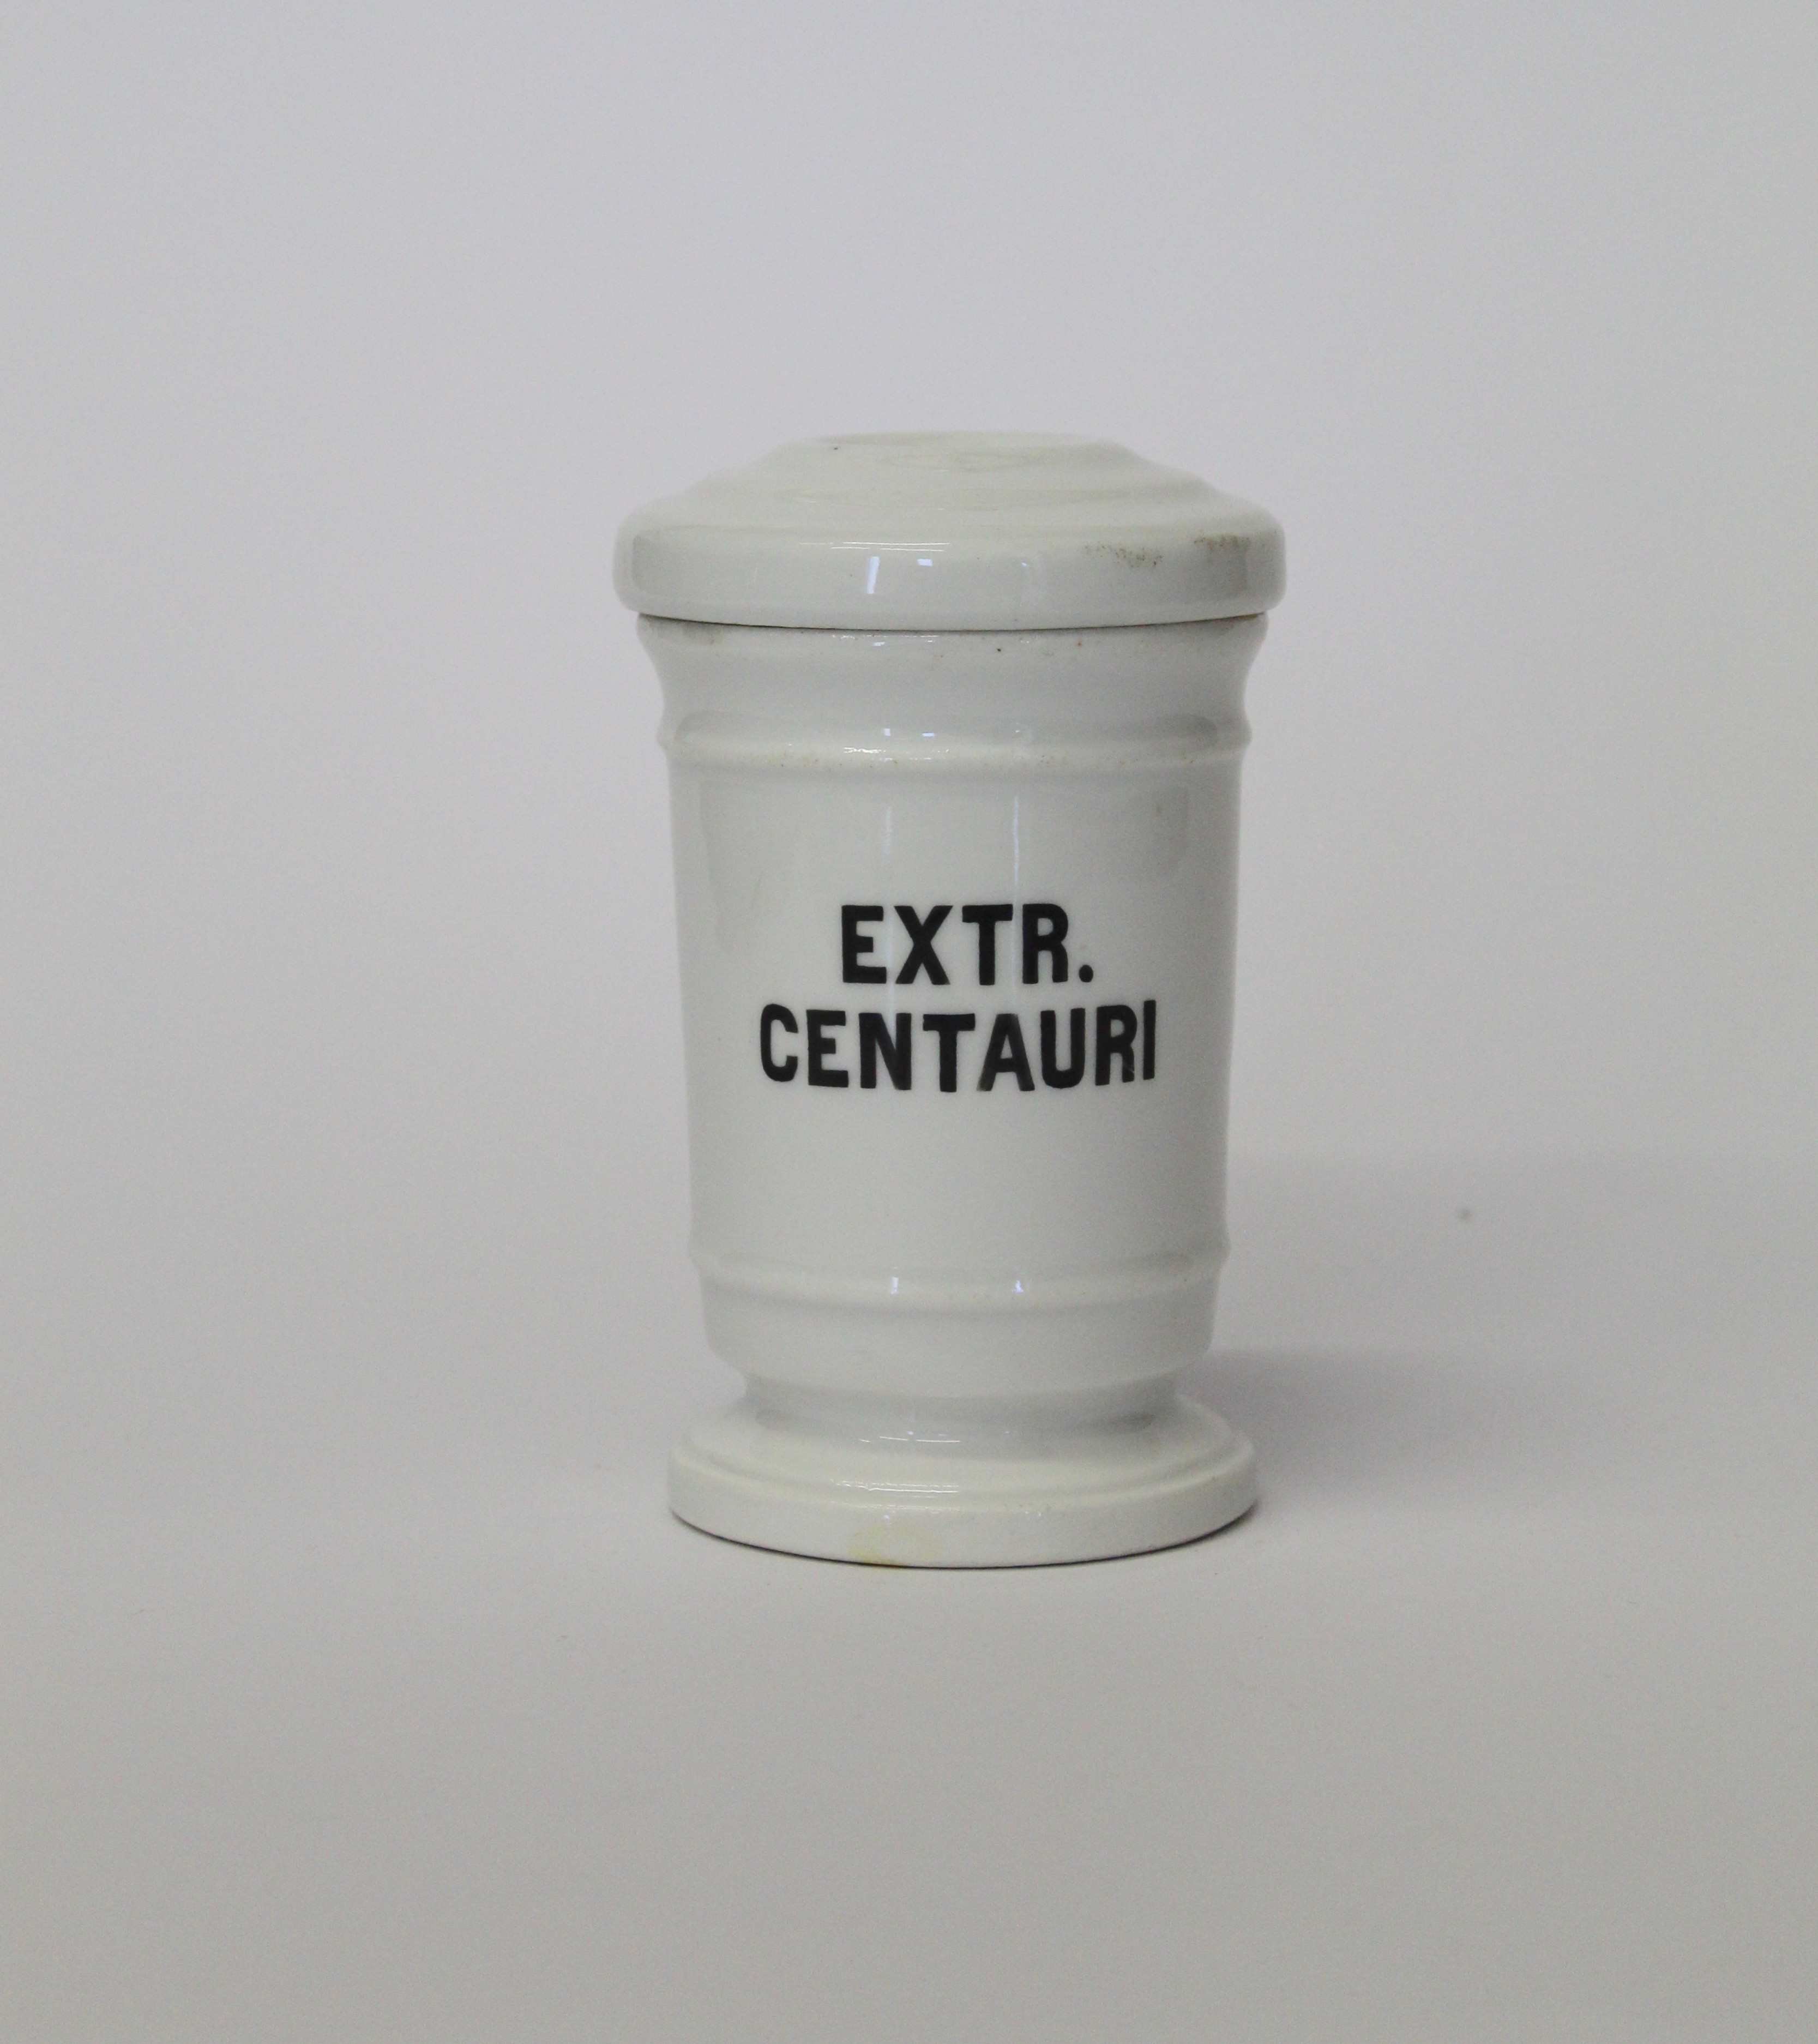 patikaedény - Extr. Centauri (Tomory Lajos Múzeum CC BY-NC-SA)